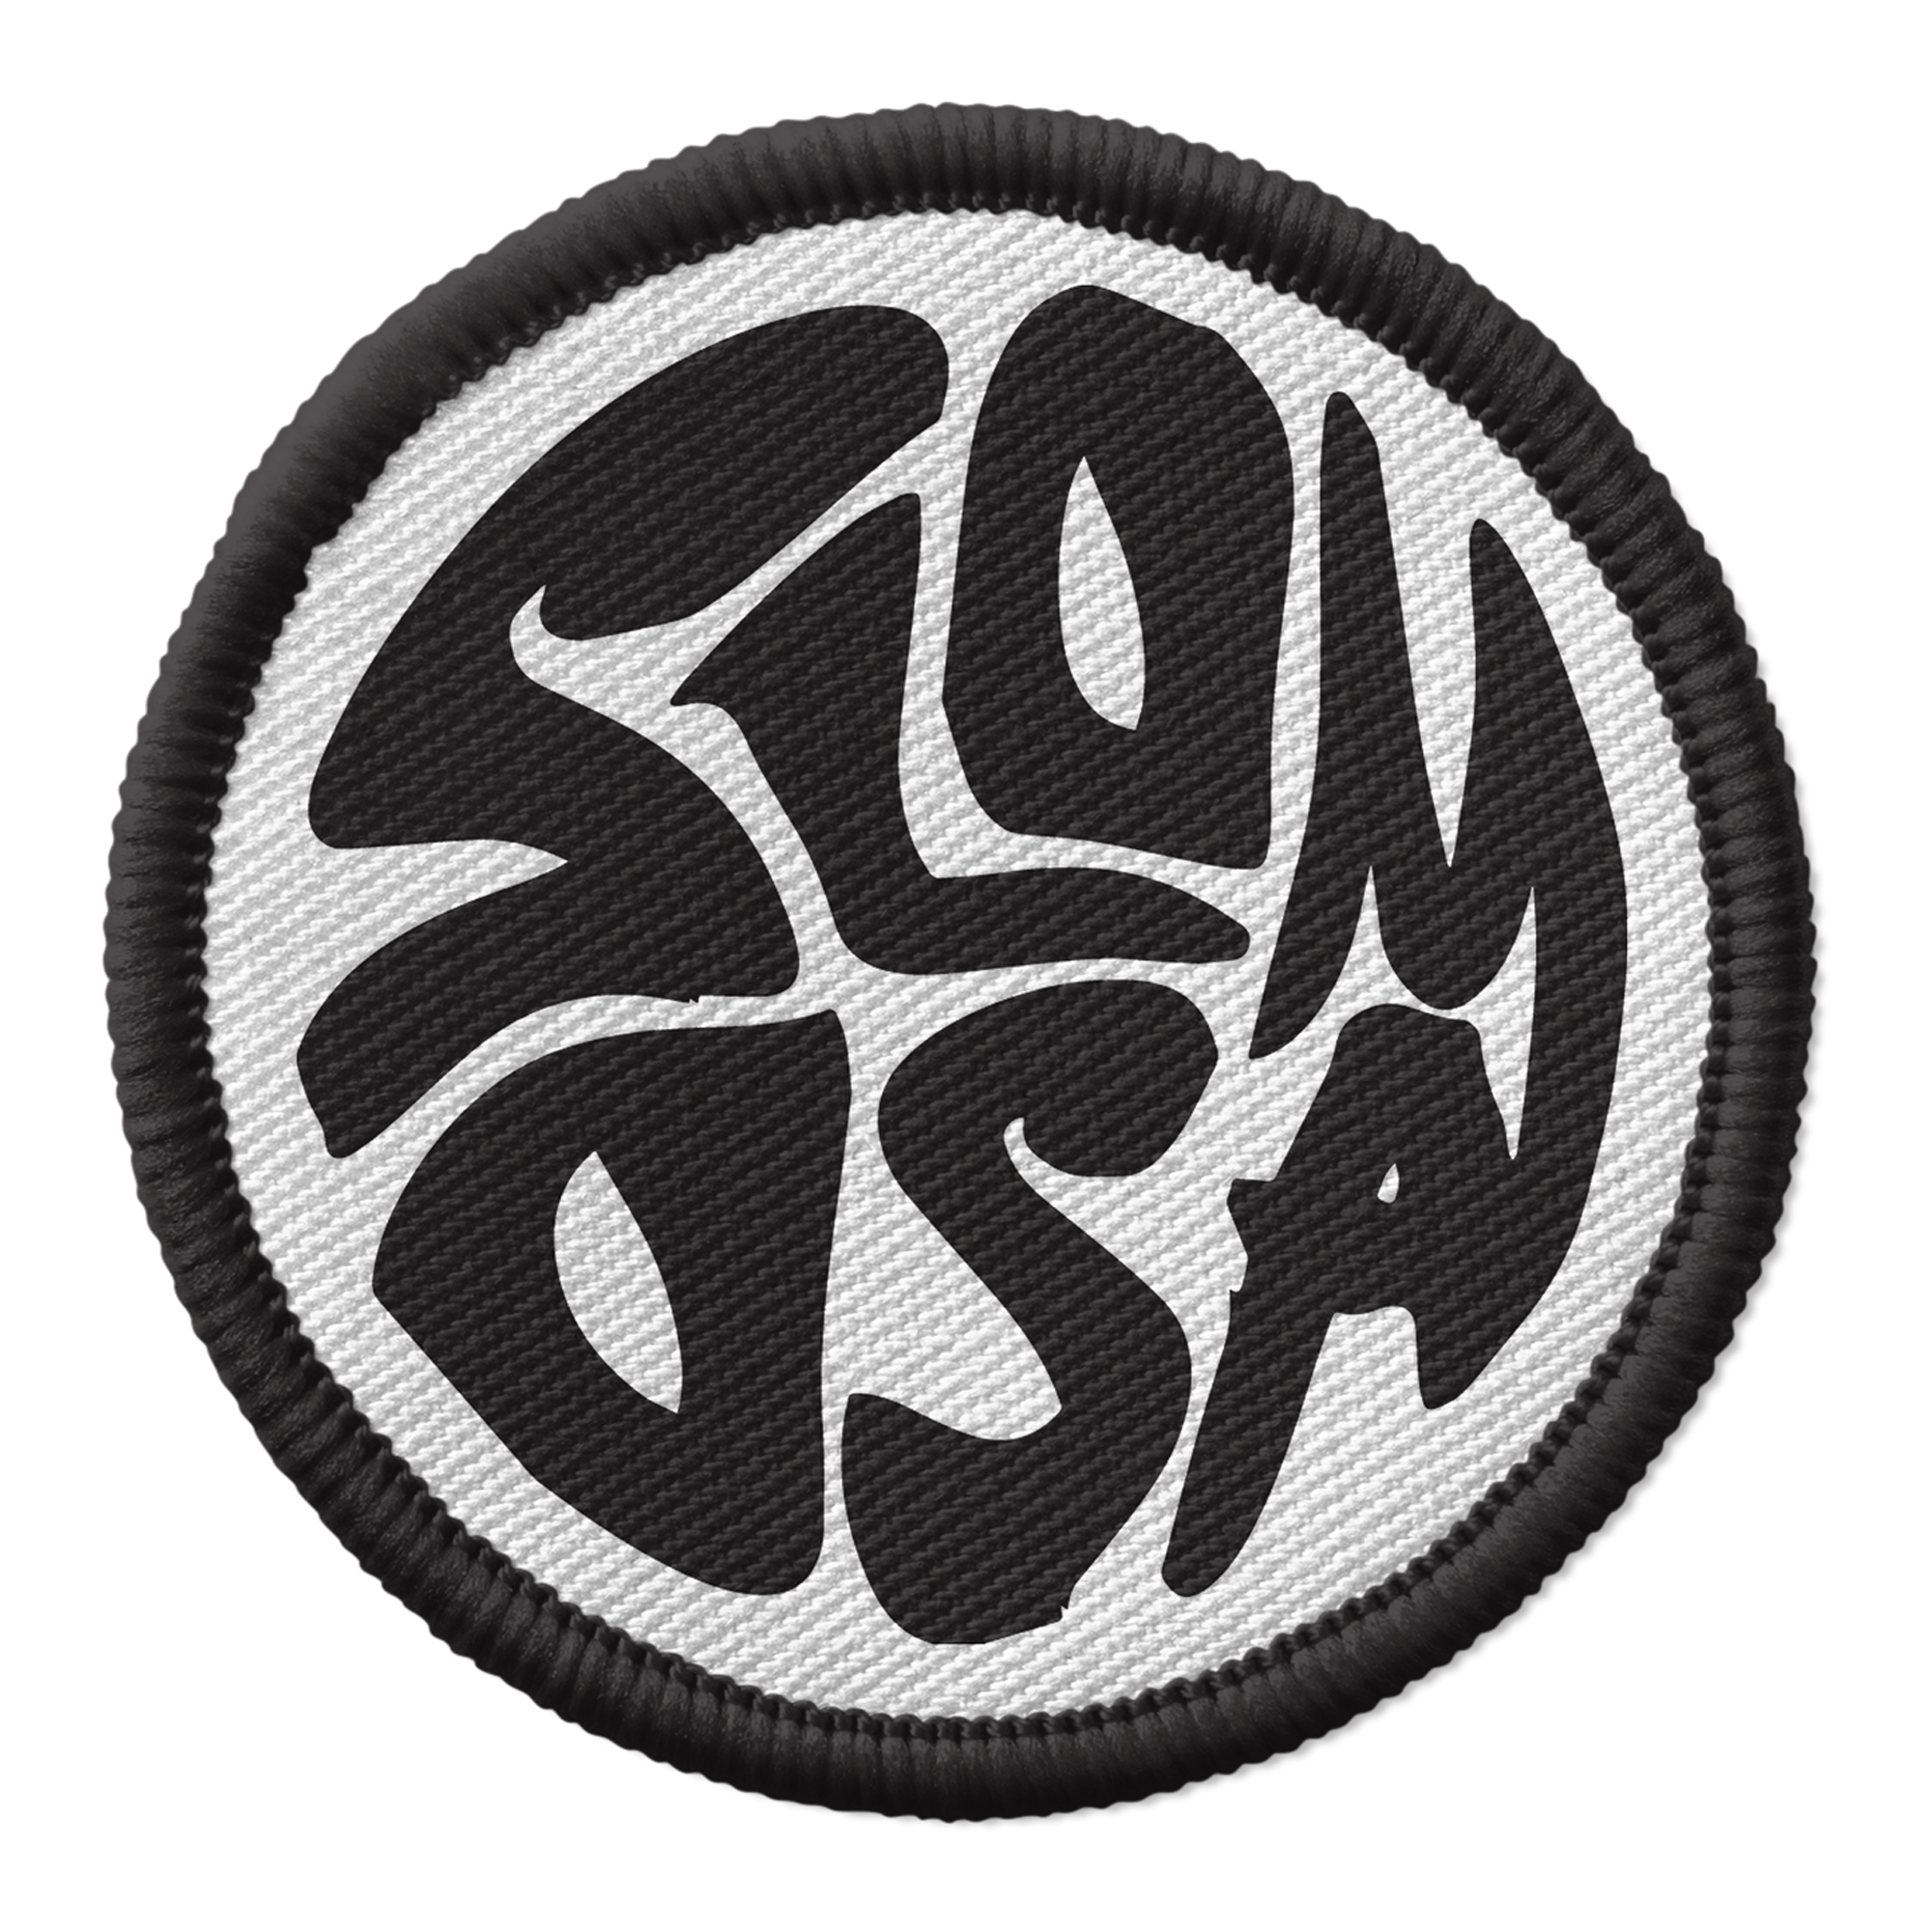 Slomosa - Tundra Rock Metallic Gold Vinyl